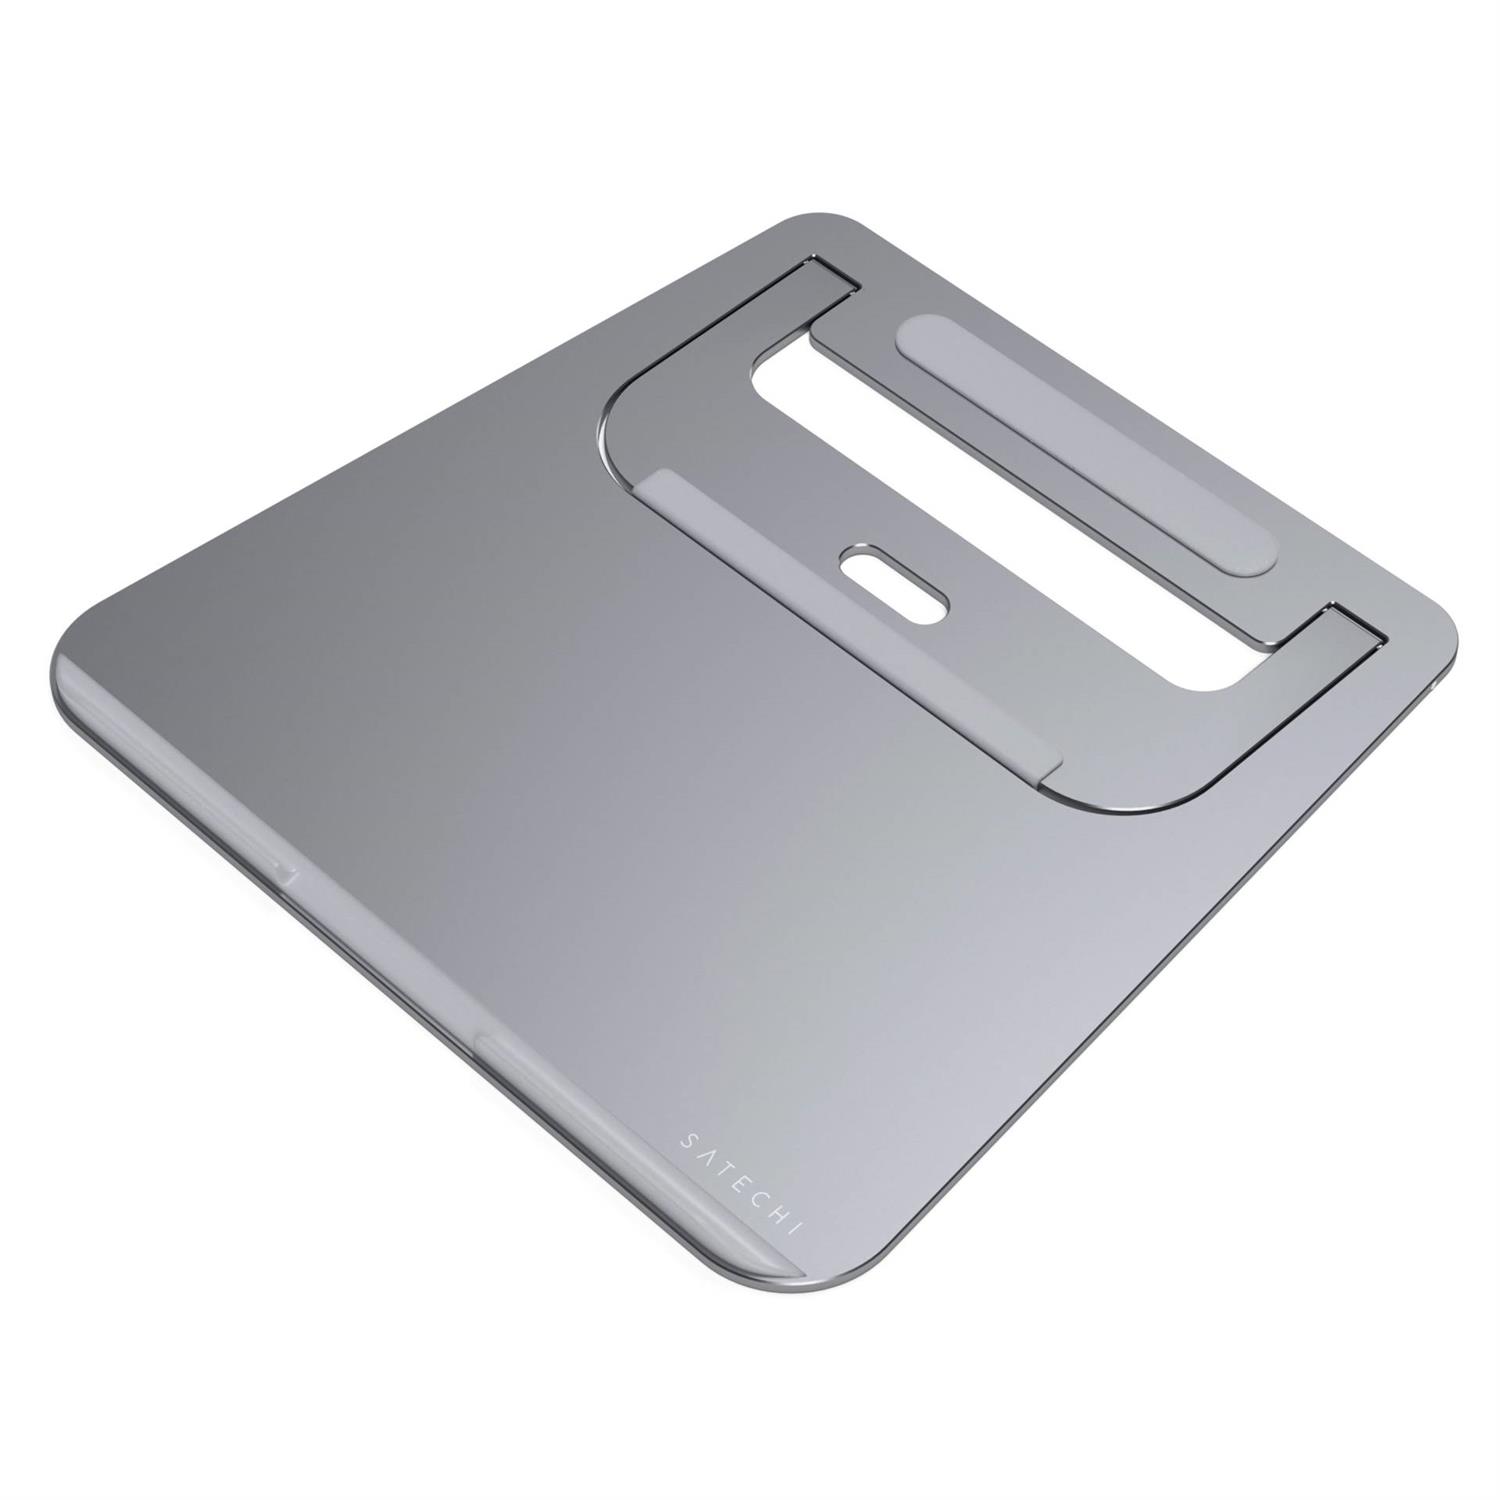 Satechi Aluminum Laptop Stand - space gray (Grau)